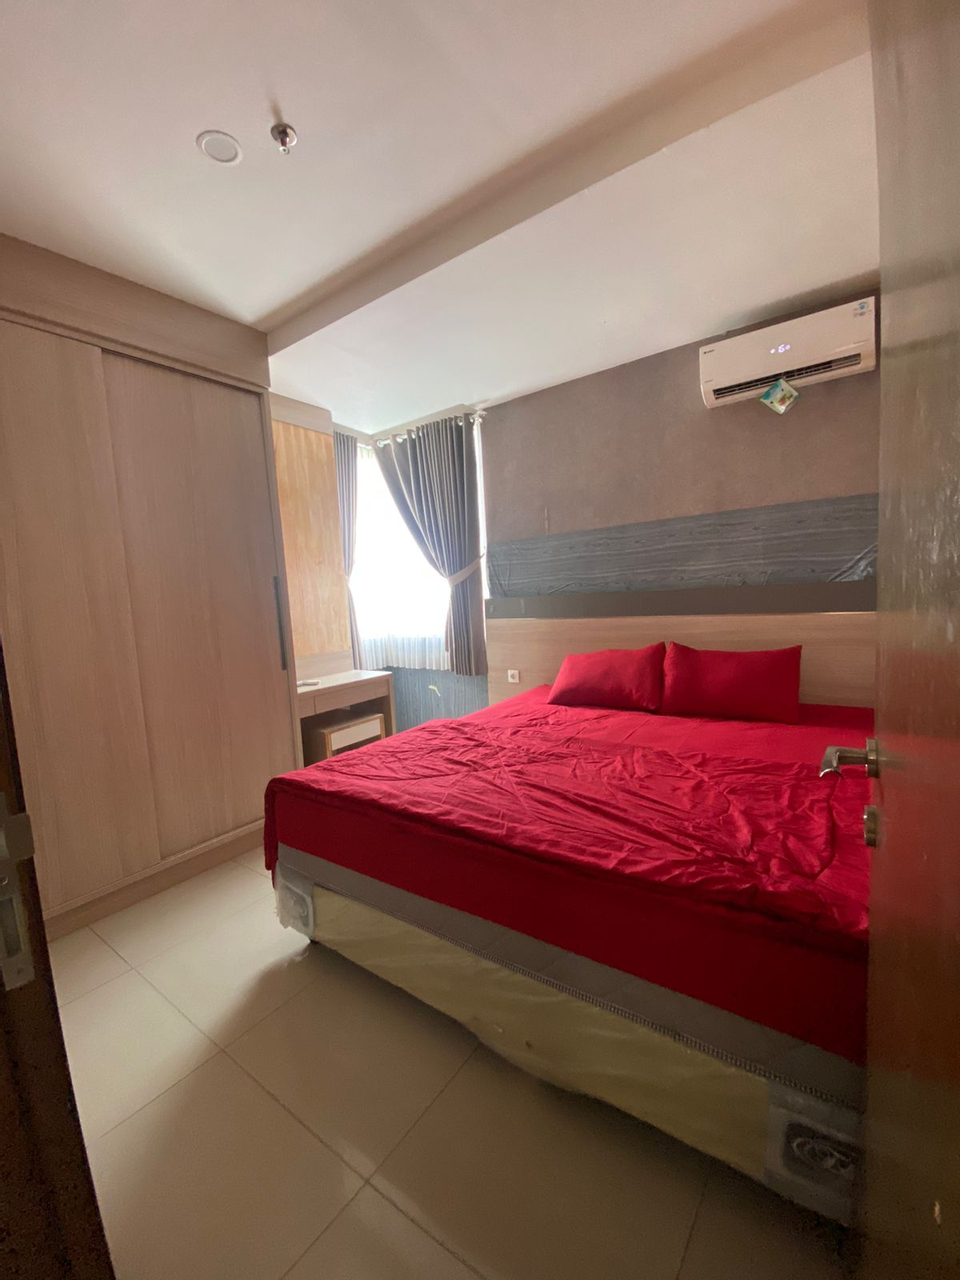 Bedroom 3, Cantique room at Vivo Apartment, Yogyakarta